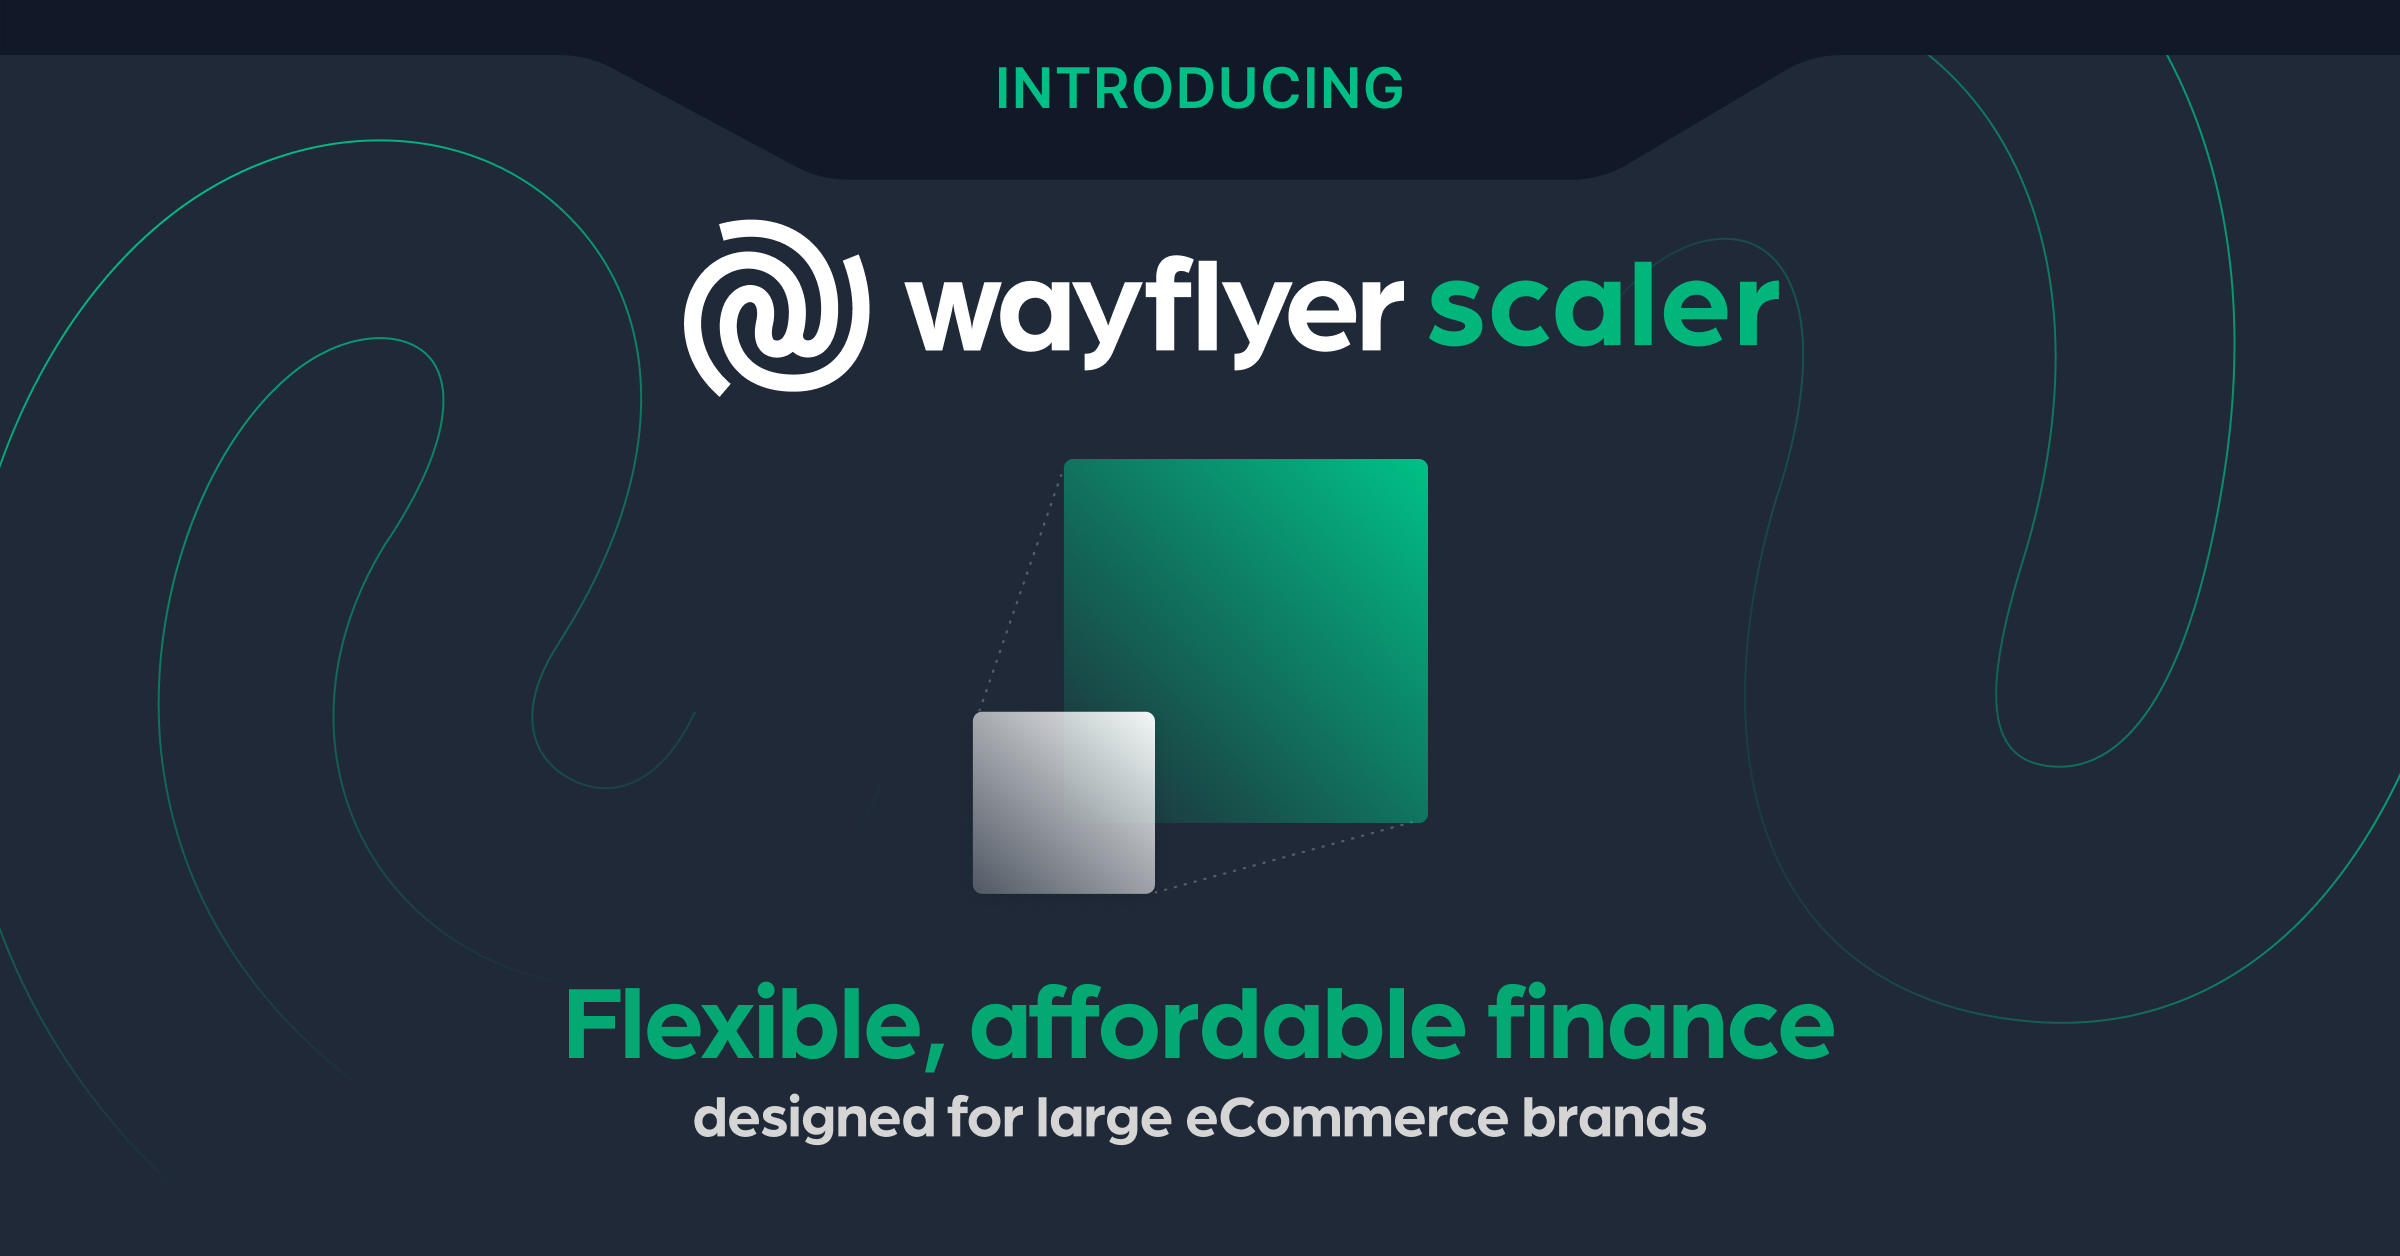 Introducing Wayflyer Scaler; Flexible, affordable finance designed for large eCommerce brands